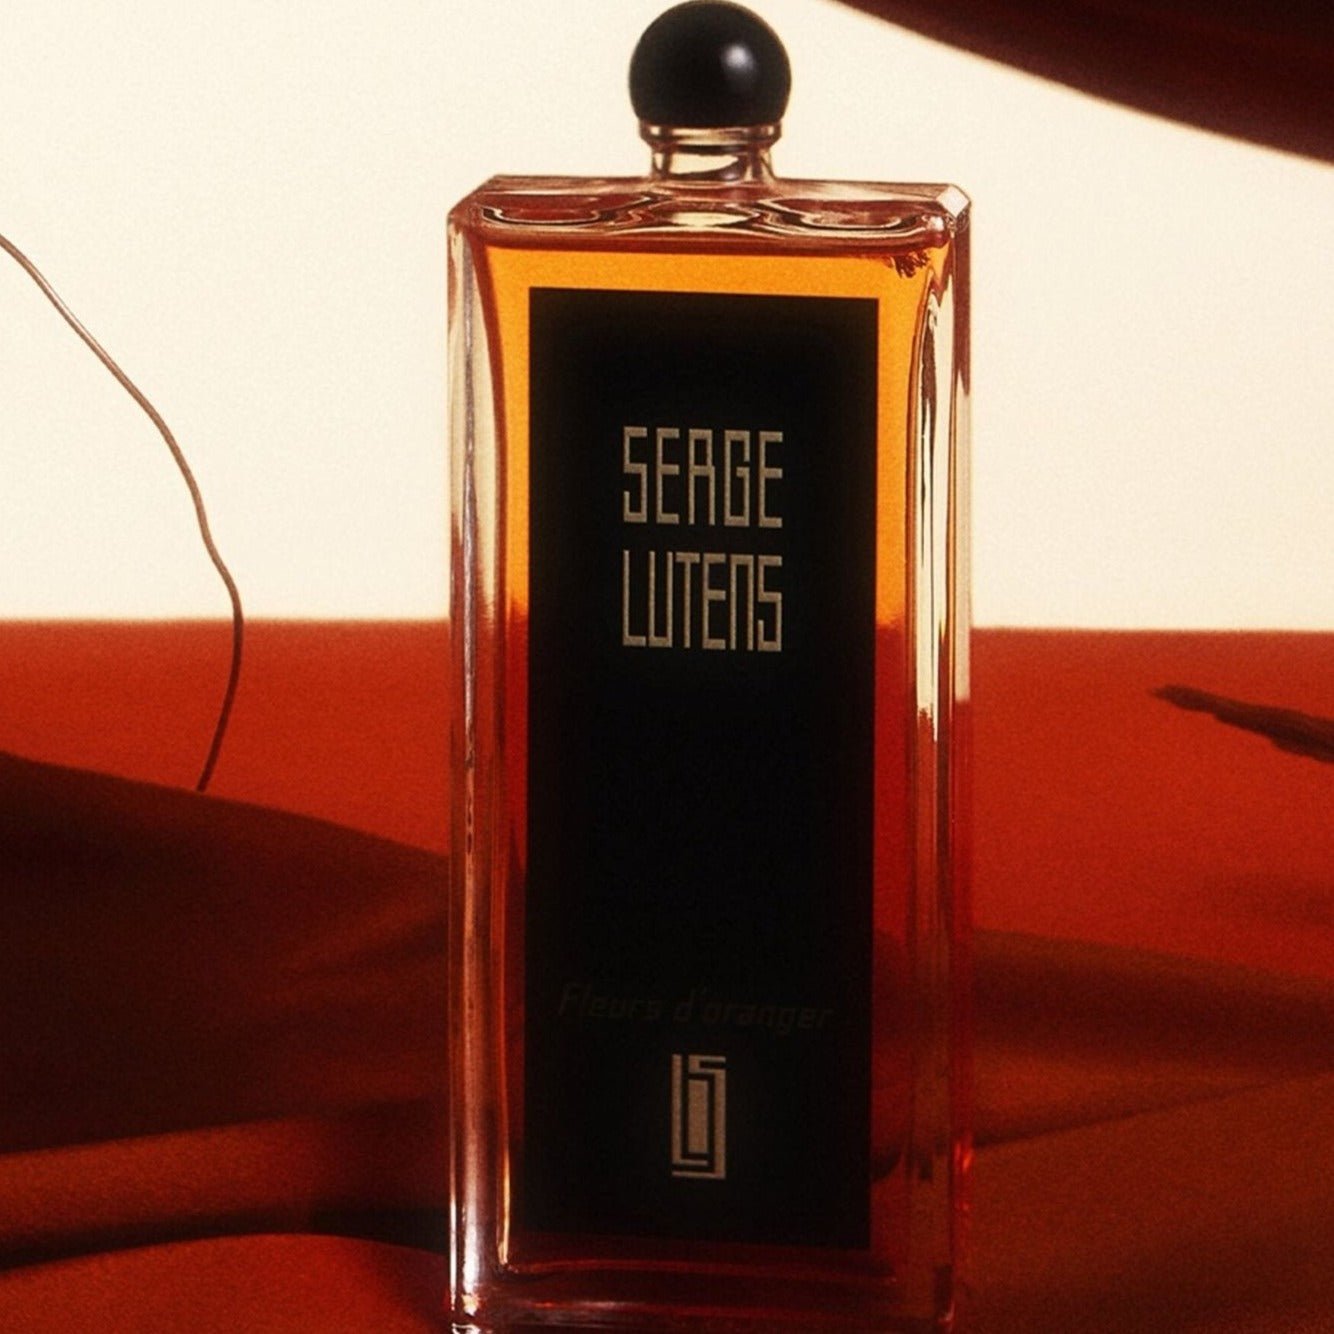 Serge Lutens Ambre Sultan EDP | My Perfume Shop Australia